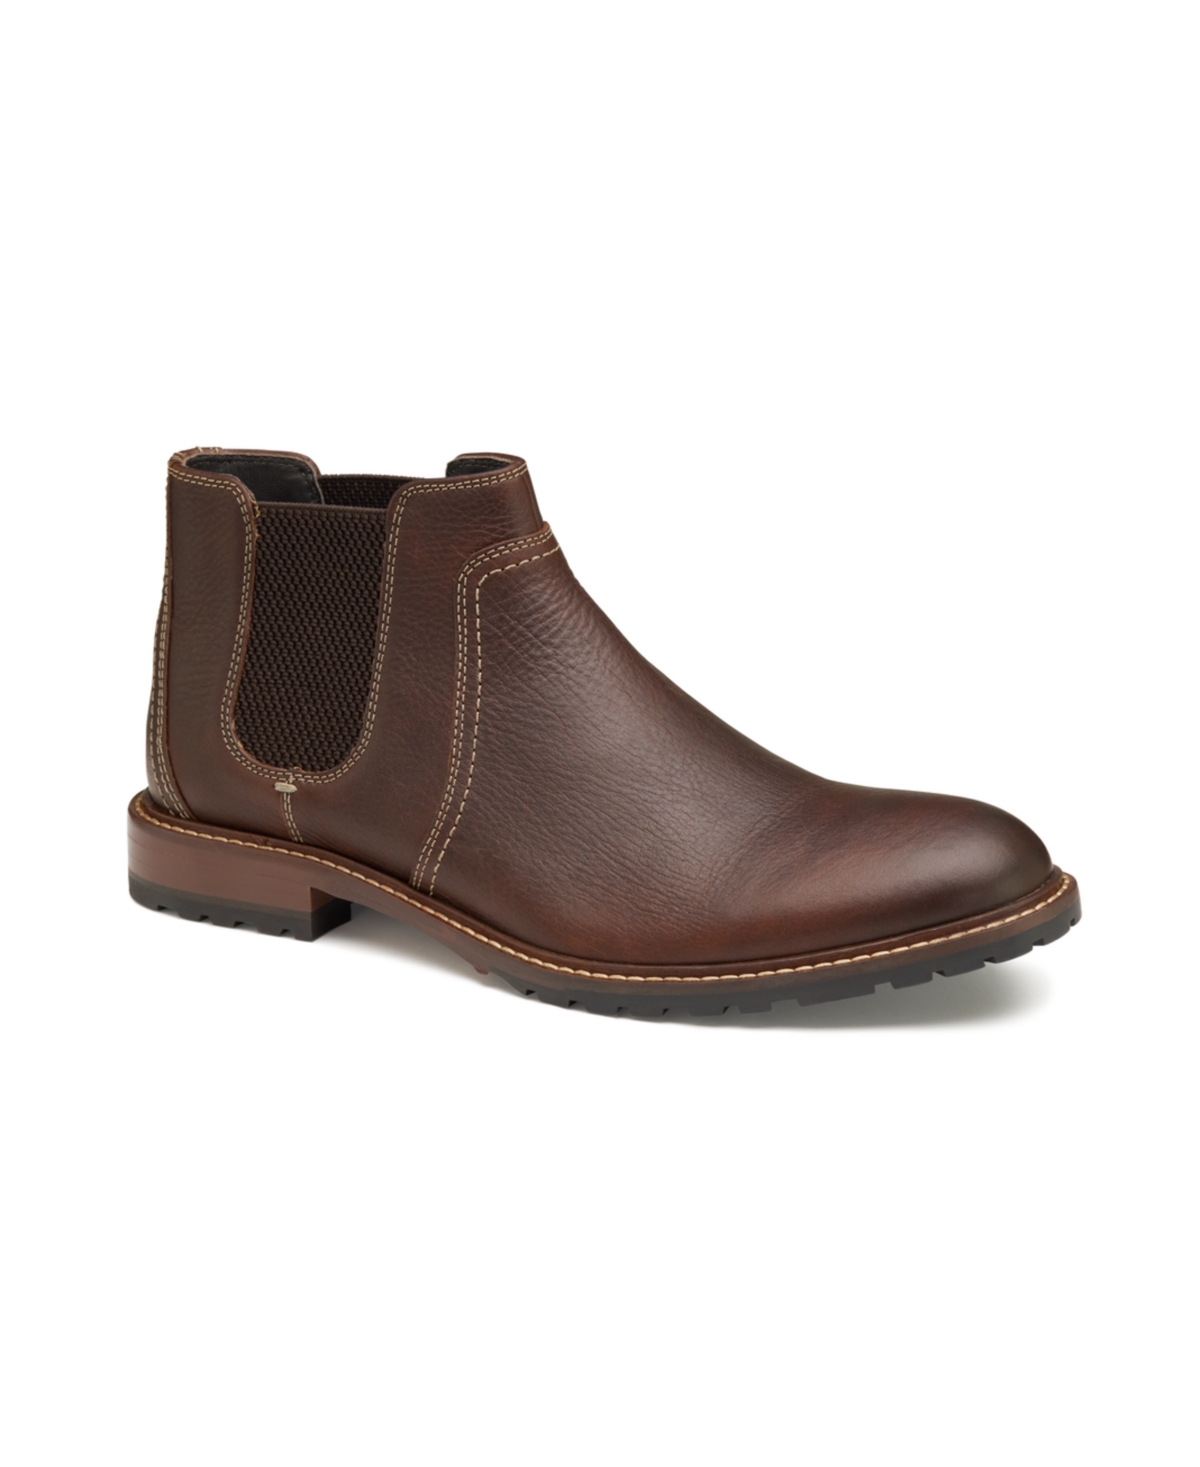 Men's Bedford Chelsea Boots - Saddle Tan